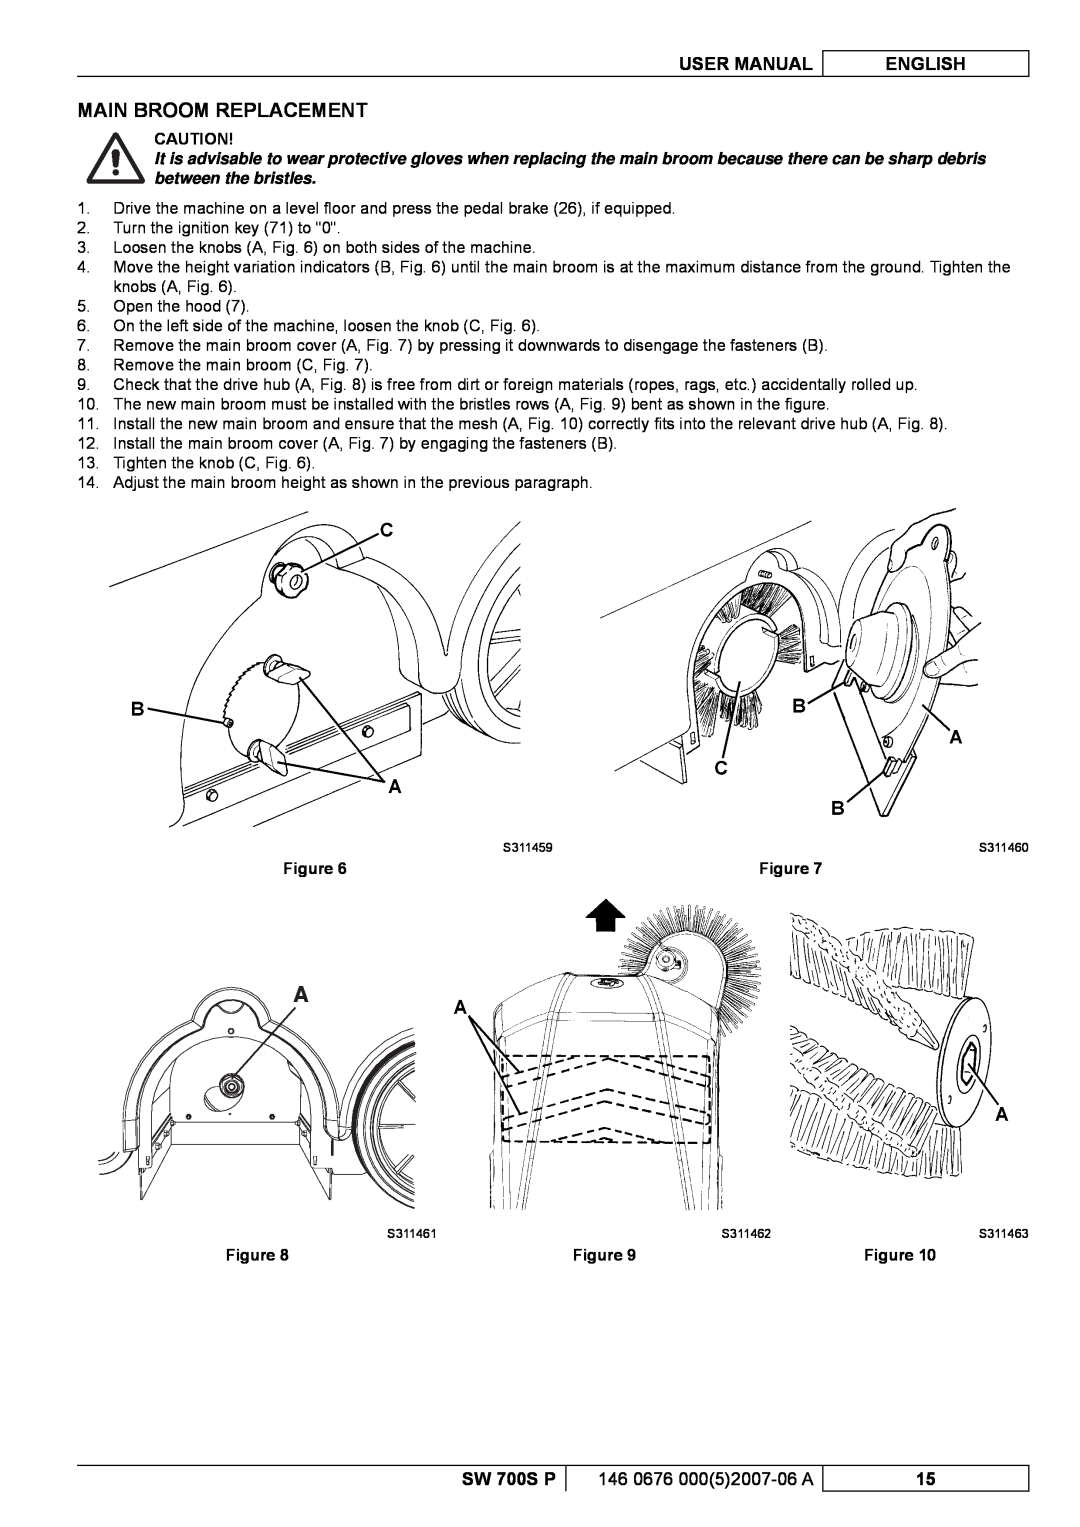 Nilfisk-Advance America SW 700S P Main Broom Replacement, User Manual, English, 146 0676 00052007-06A, Figure 